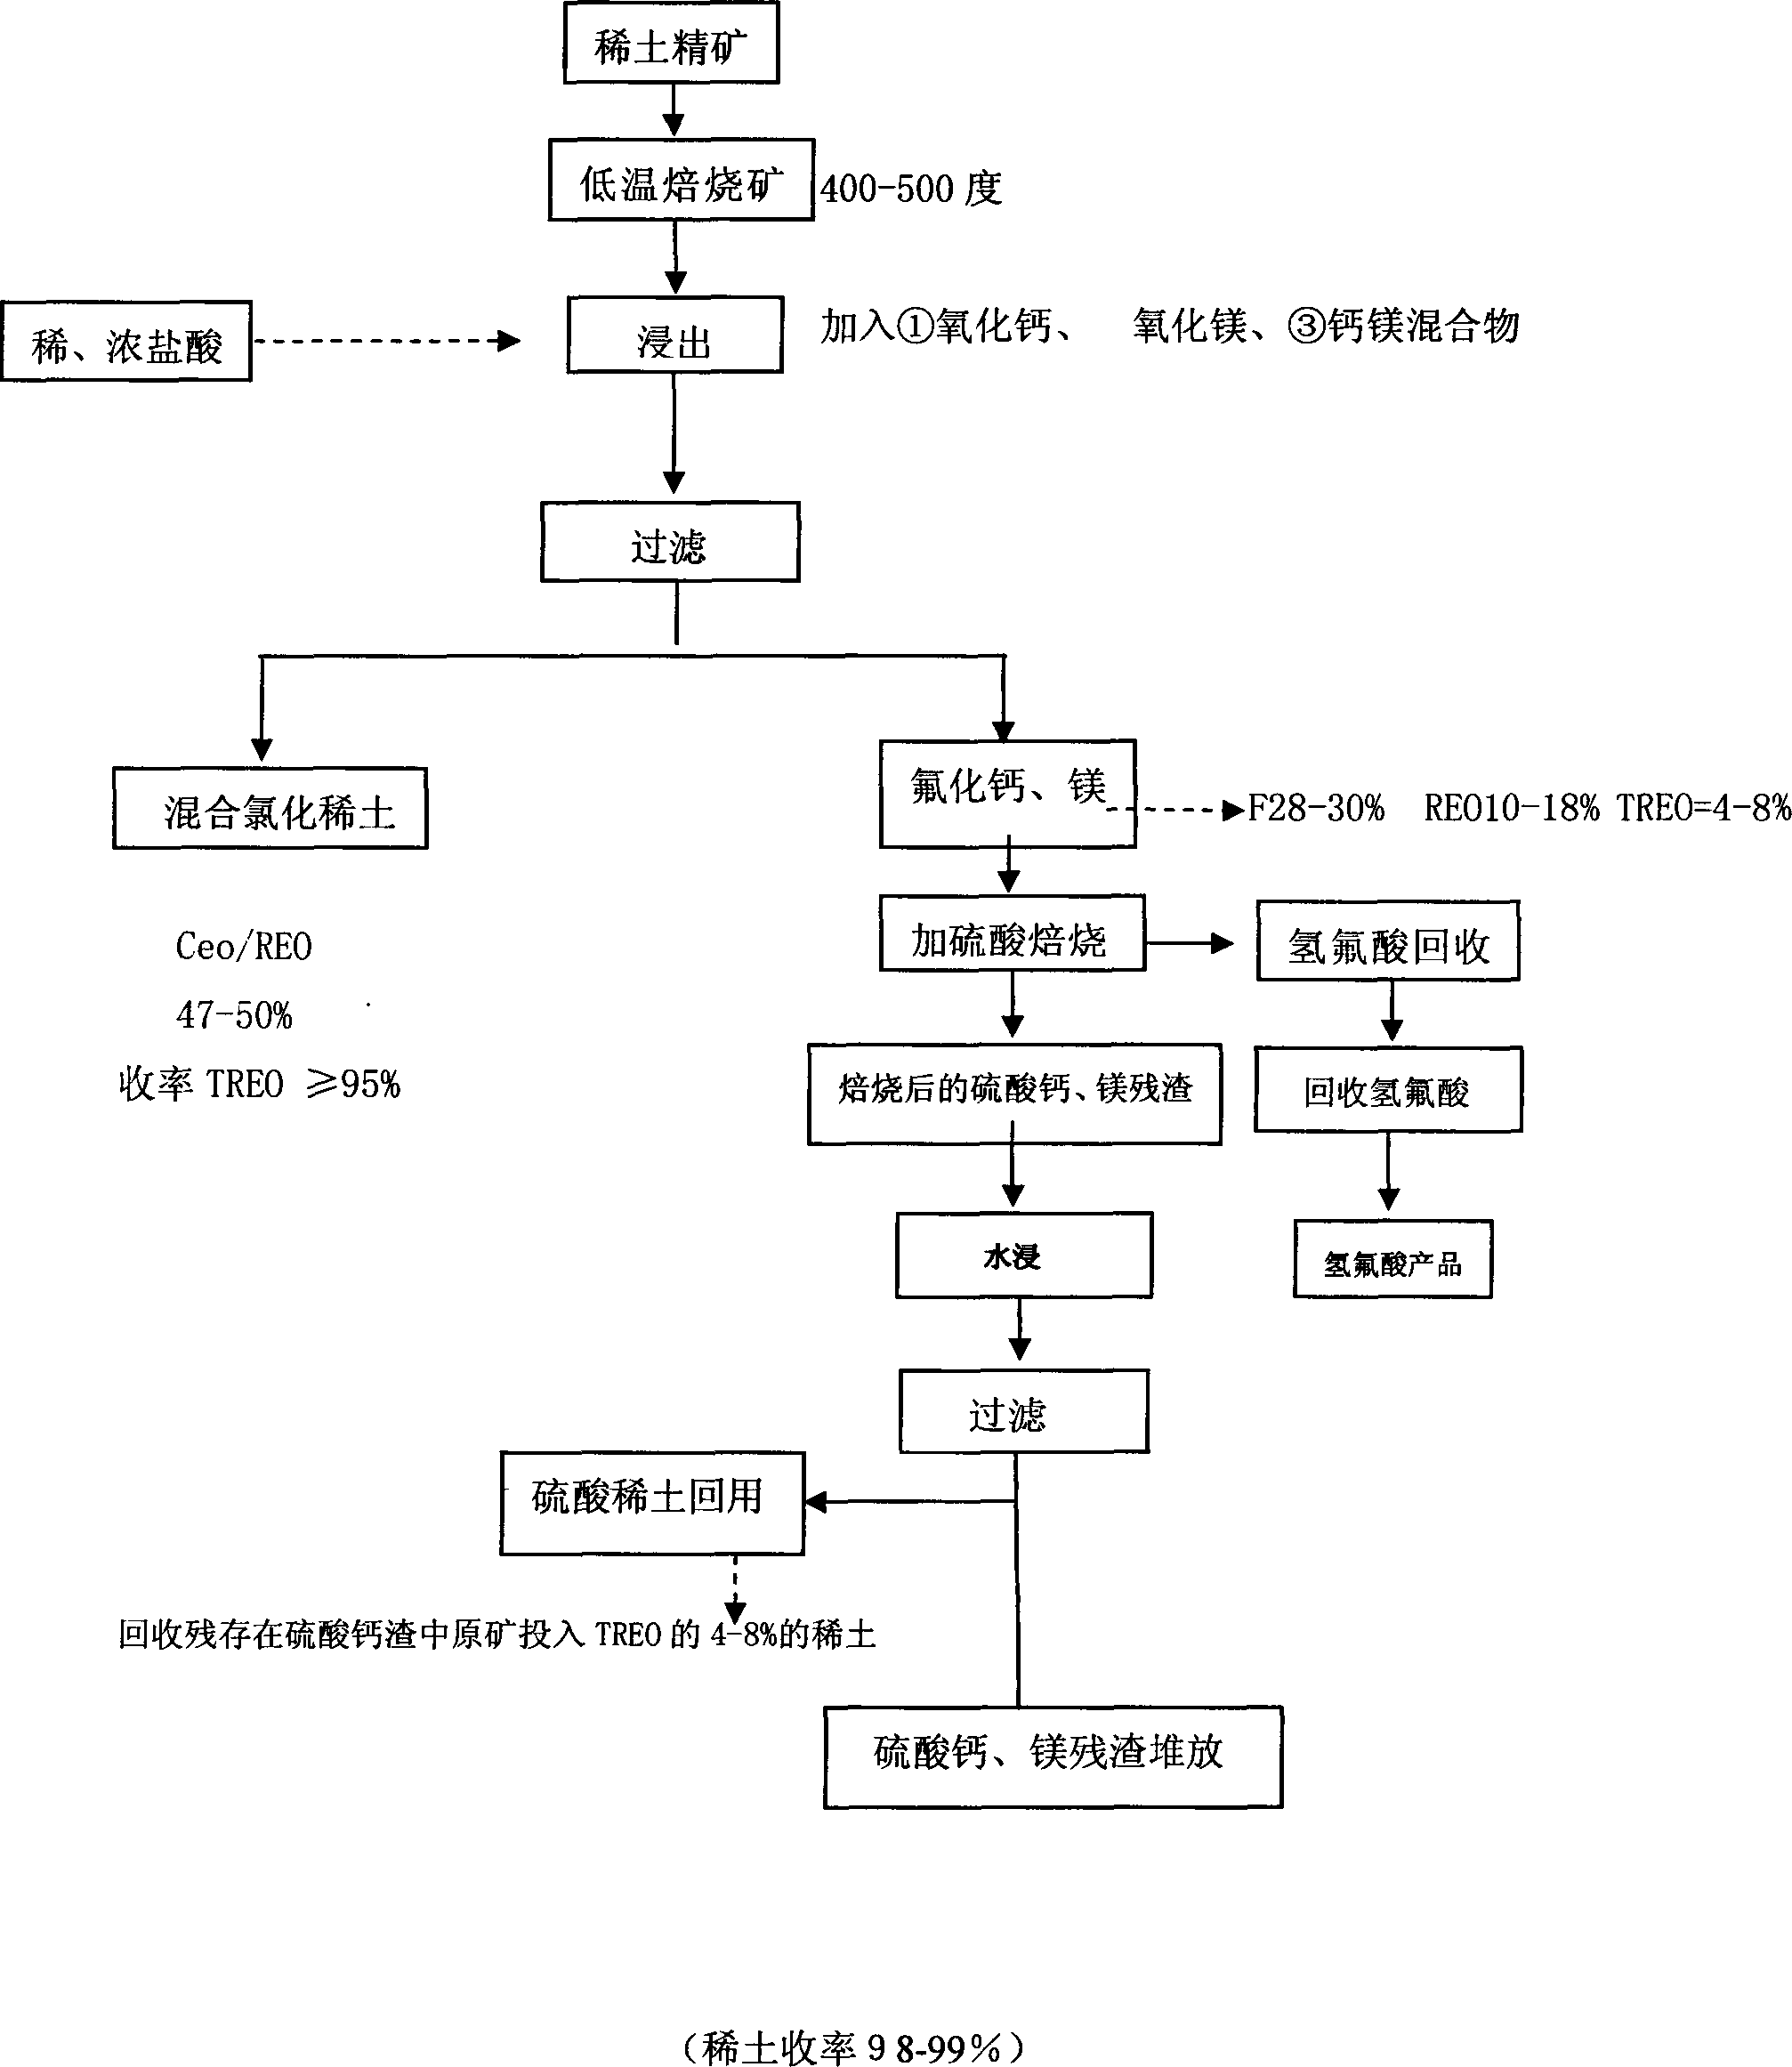 Method for replacement dissolution of bastnaesite (bastnasite)